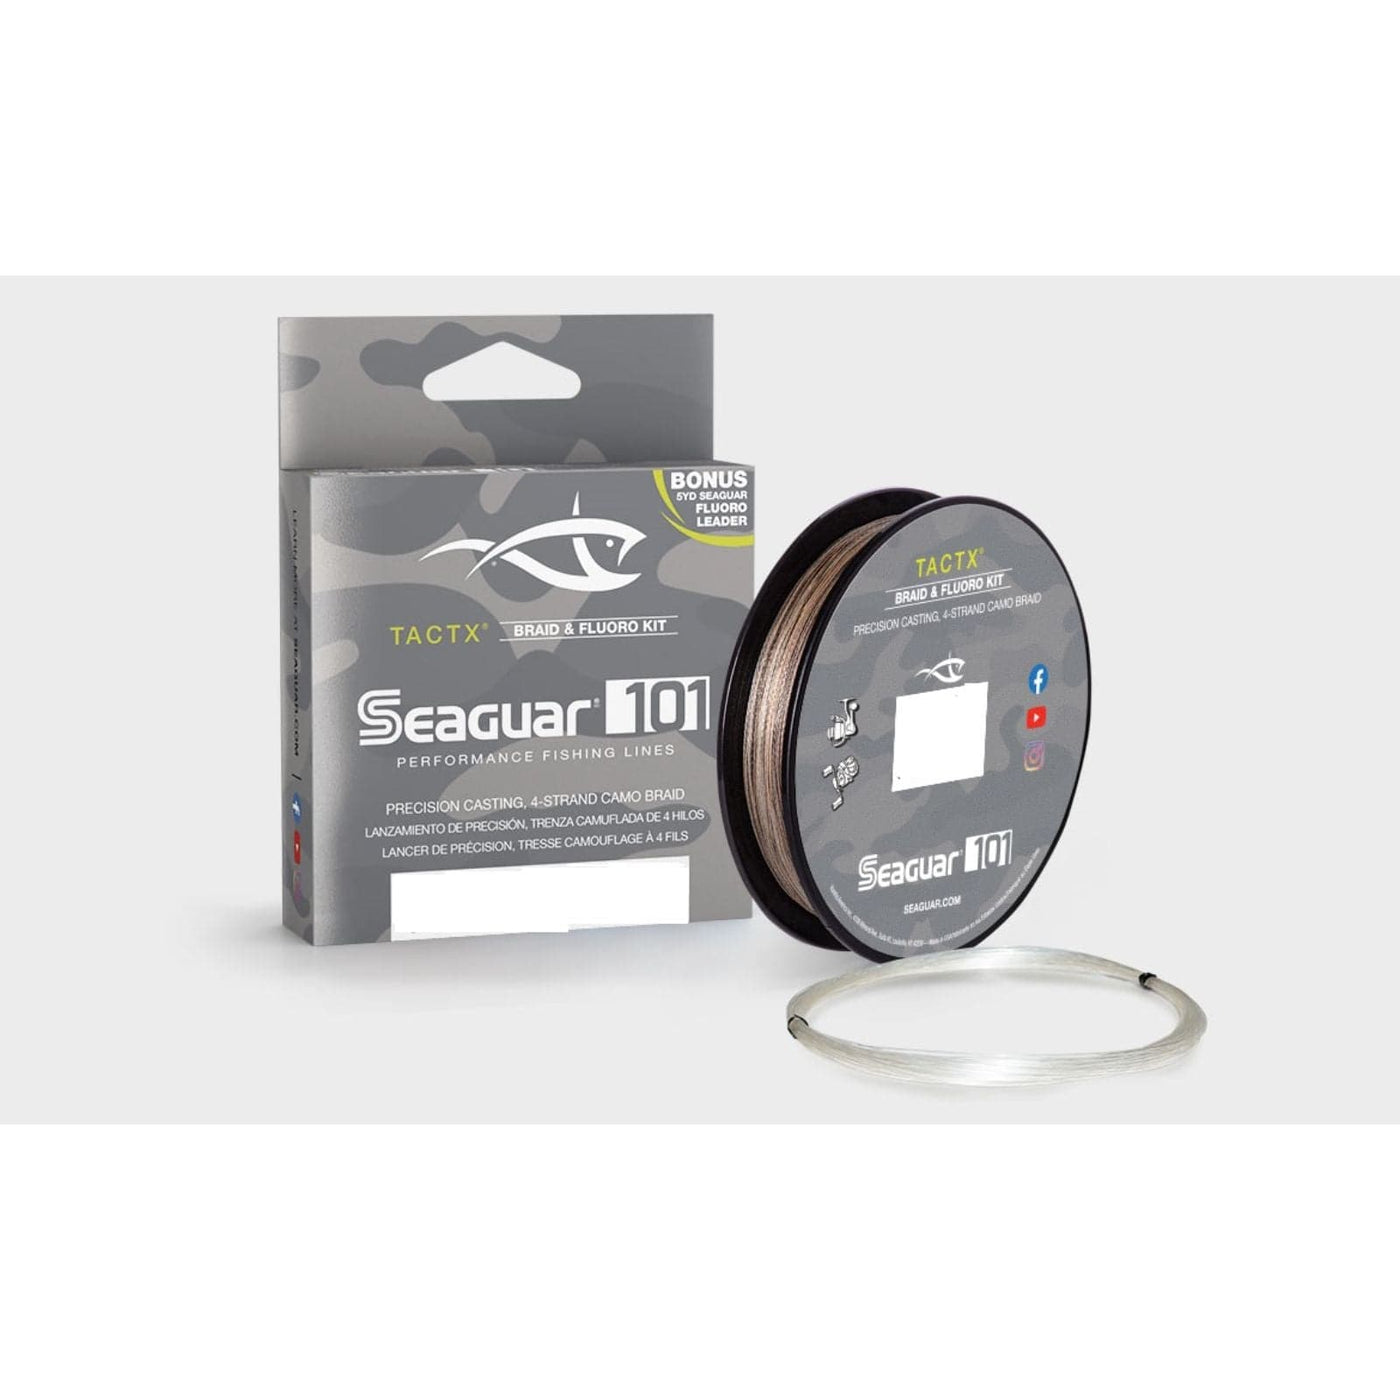 Seaguar Seaguar 101 TactX 50TCX150 Braid w Fluoro Leader 150 Yds Fishing